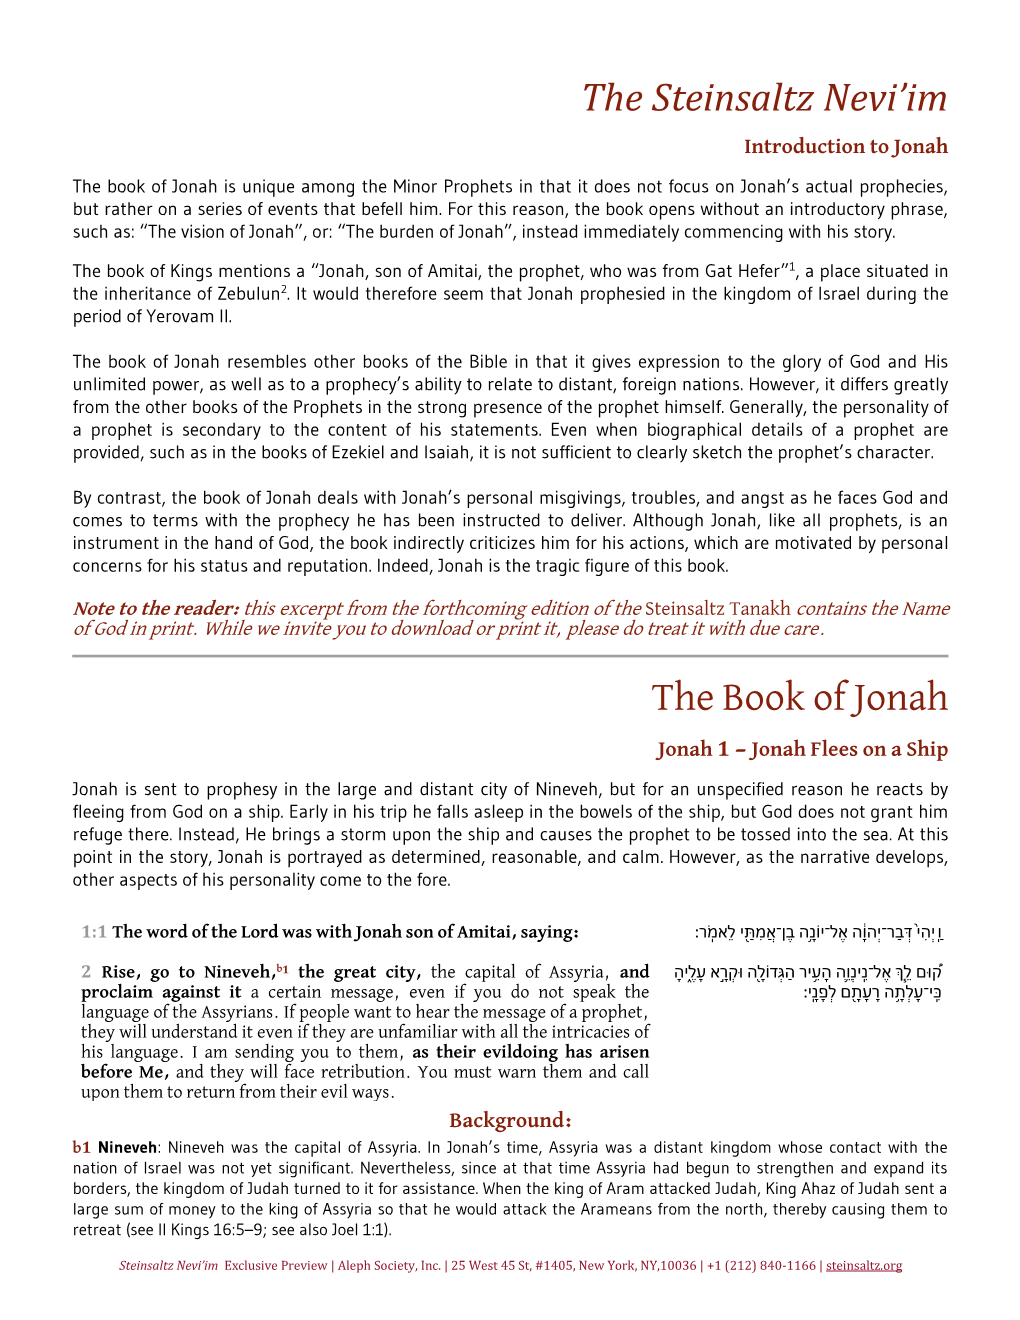 The Steinsaltz Nevi'im the Book of Jonah